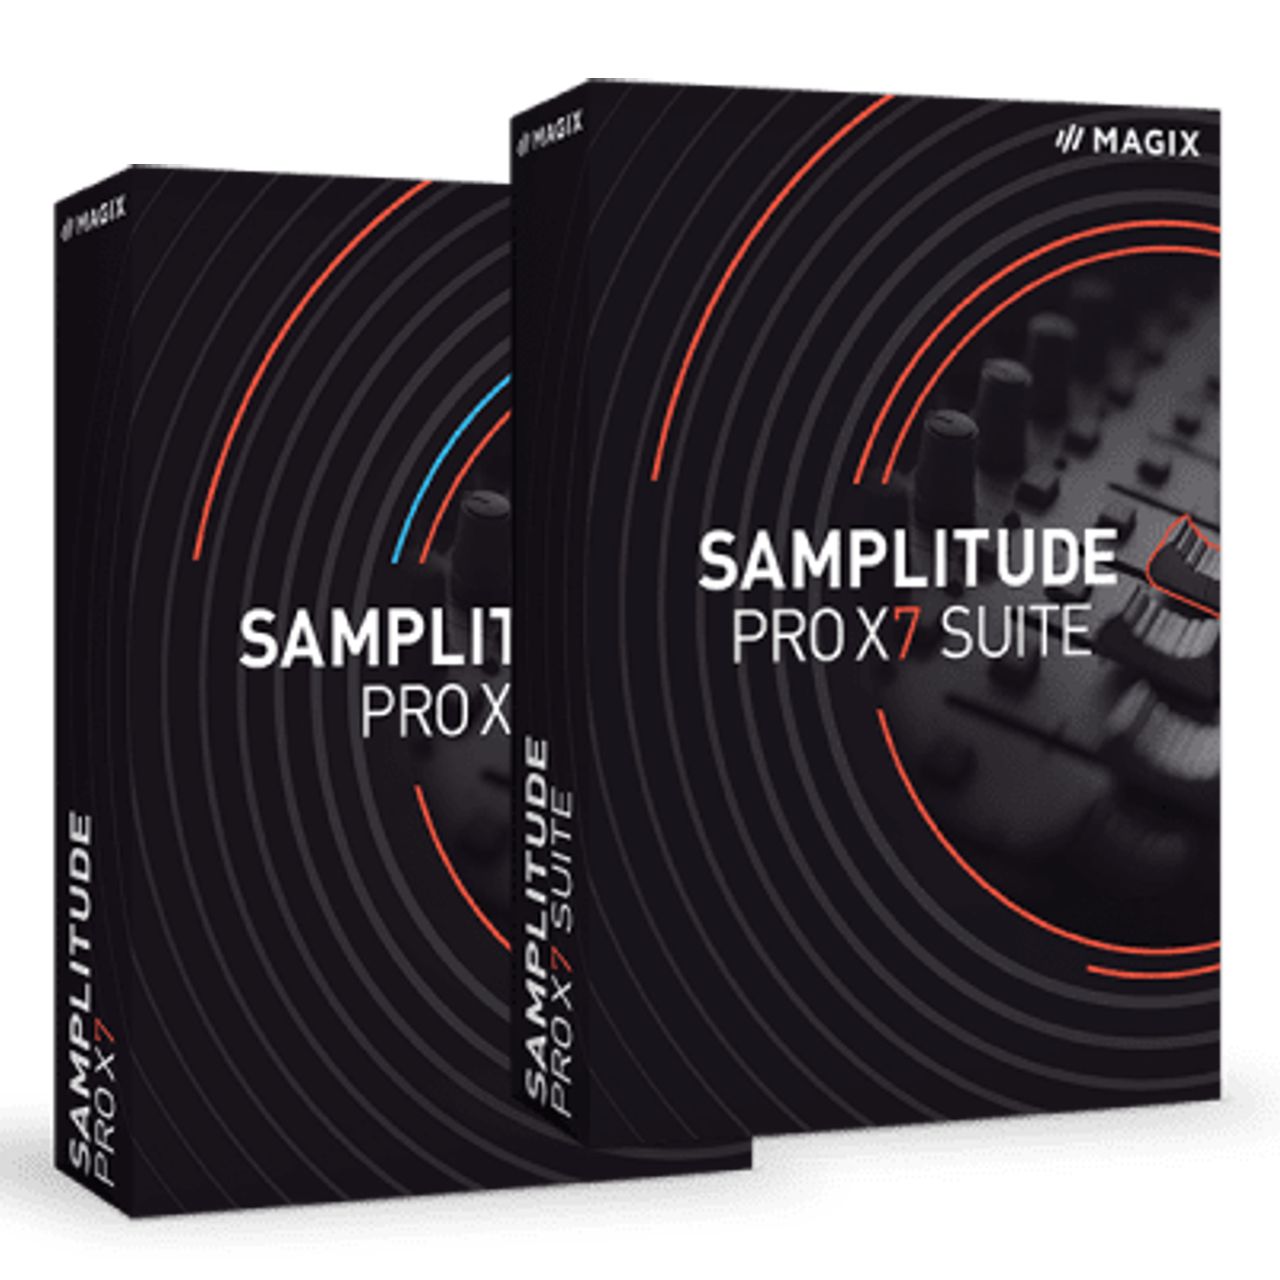 Samplitude Pro X7 y Pro X7 Suite 2